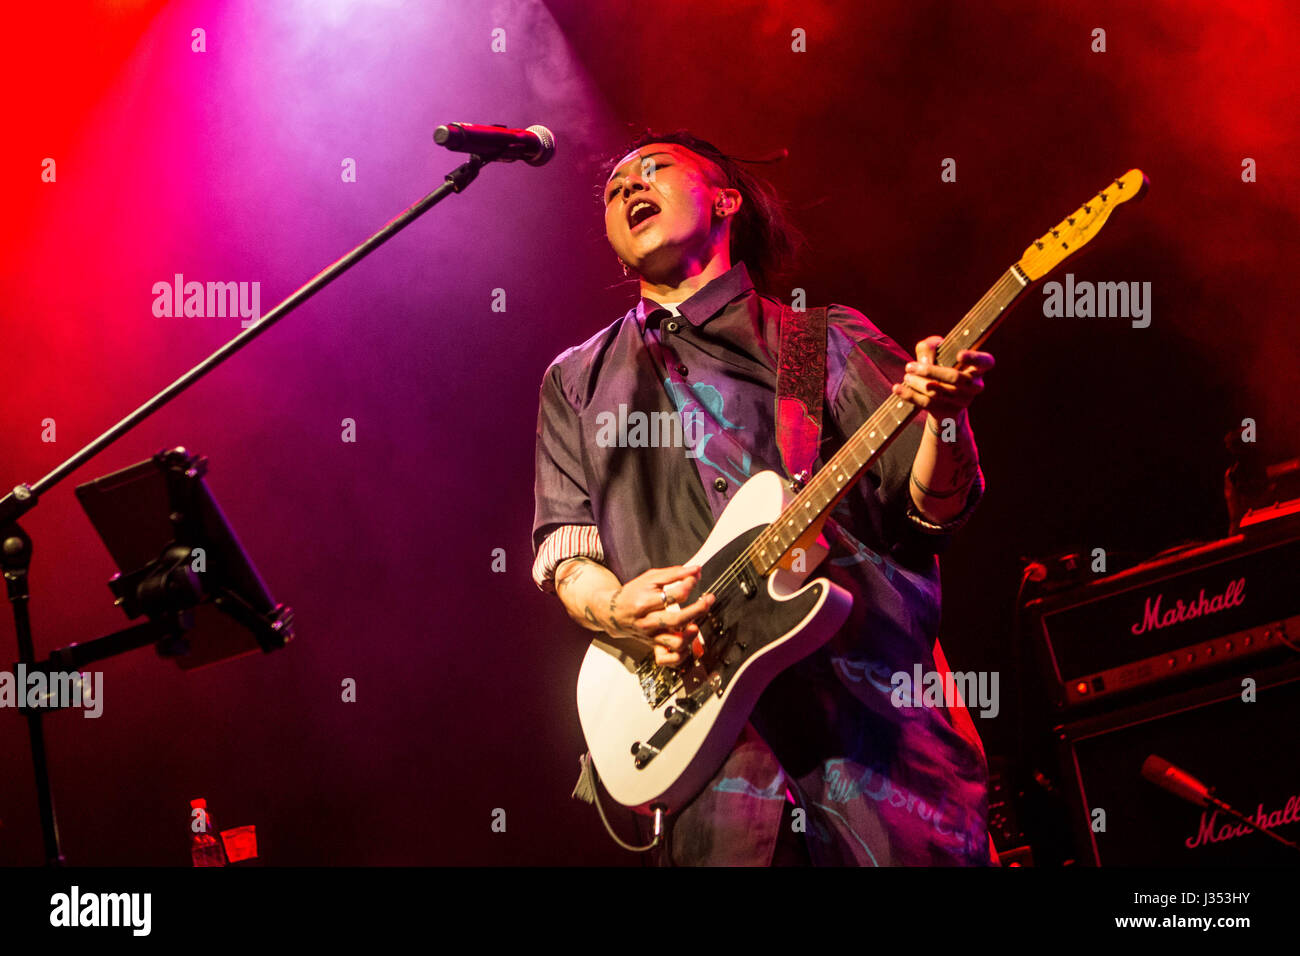 Japanese singer-songwriter Takamasa Ishihara or popularly known as Miyavi, performs live at Alcatraz. (Photo by: Mairo Cinquetti/Pacific Press) Stock Photo